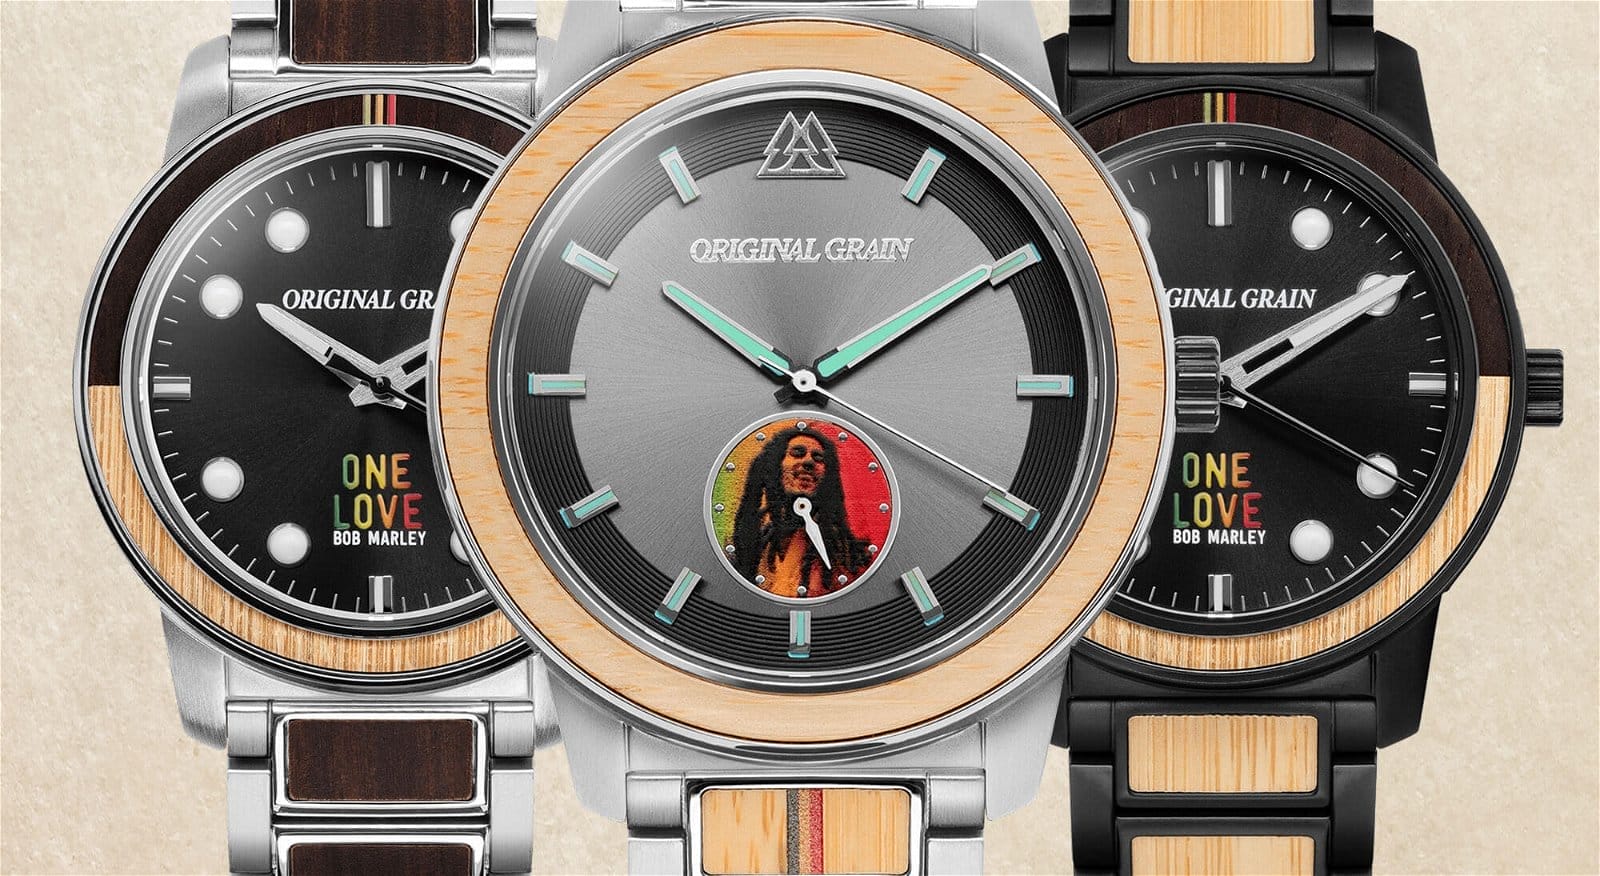 Shop Original Grain's Partnership with Bob Marley